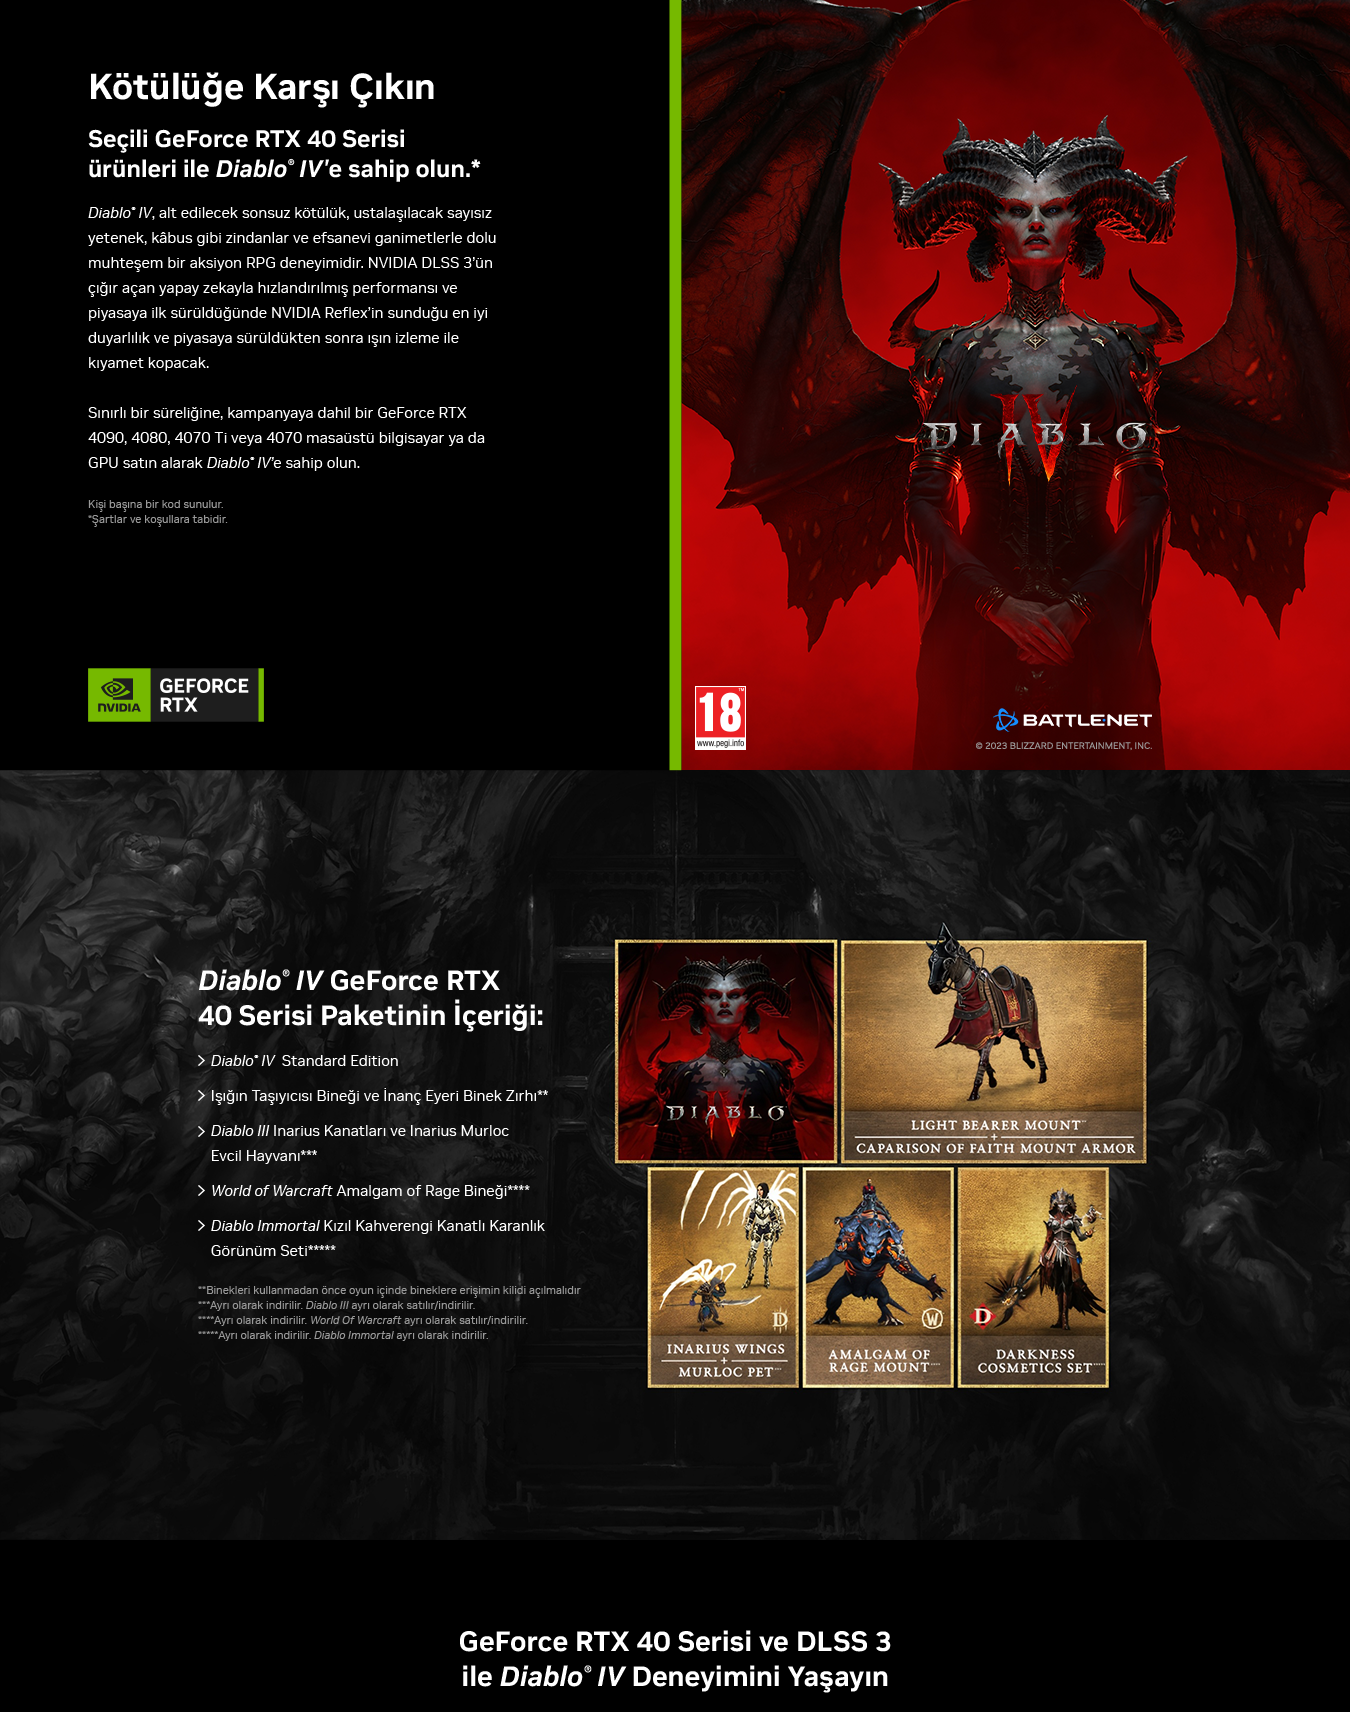 GeForce RTX Diablo IV 40 Series Bundle